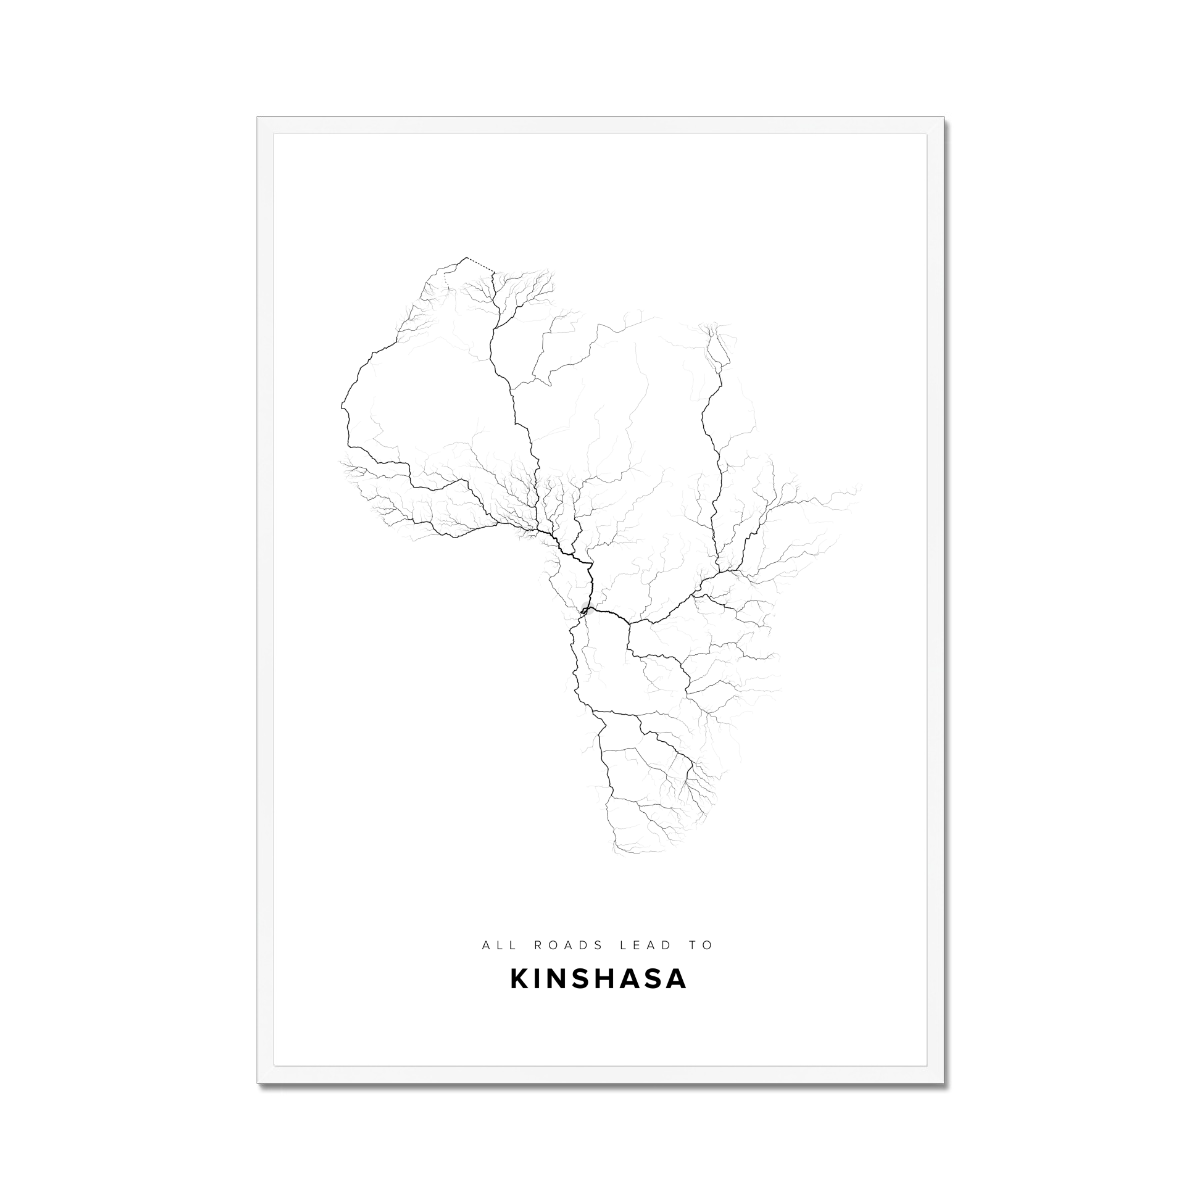 All roads lead to Kinshasa (Congo (Democratic Republic of the)) Fine Art Map Print